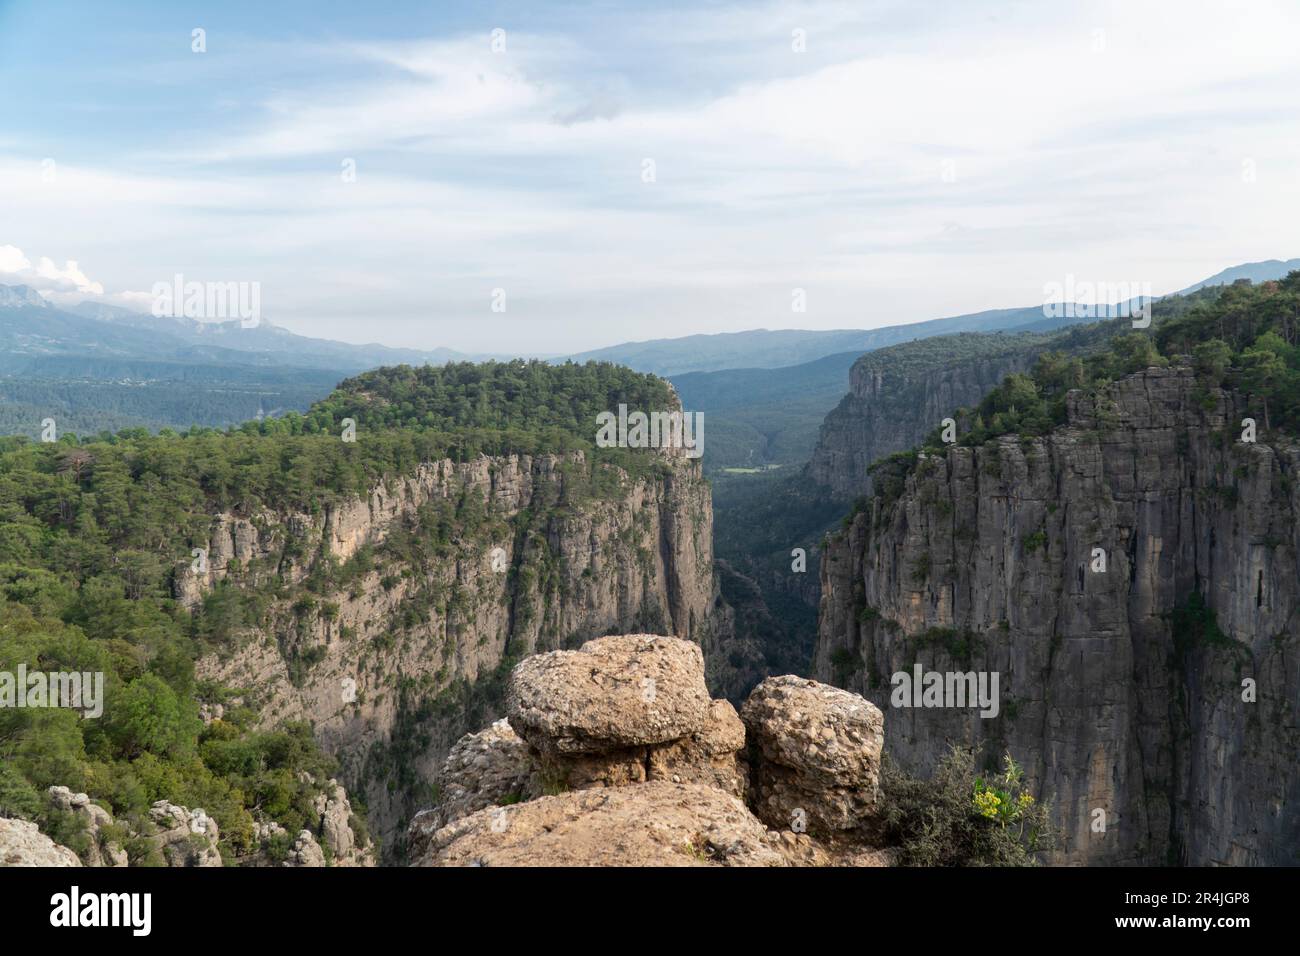 Canyon, vista dall'alto. Paesaggio di Tazi Kanyon a Manavgat, Antalya, Turchia Foto Stock